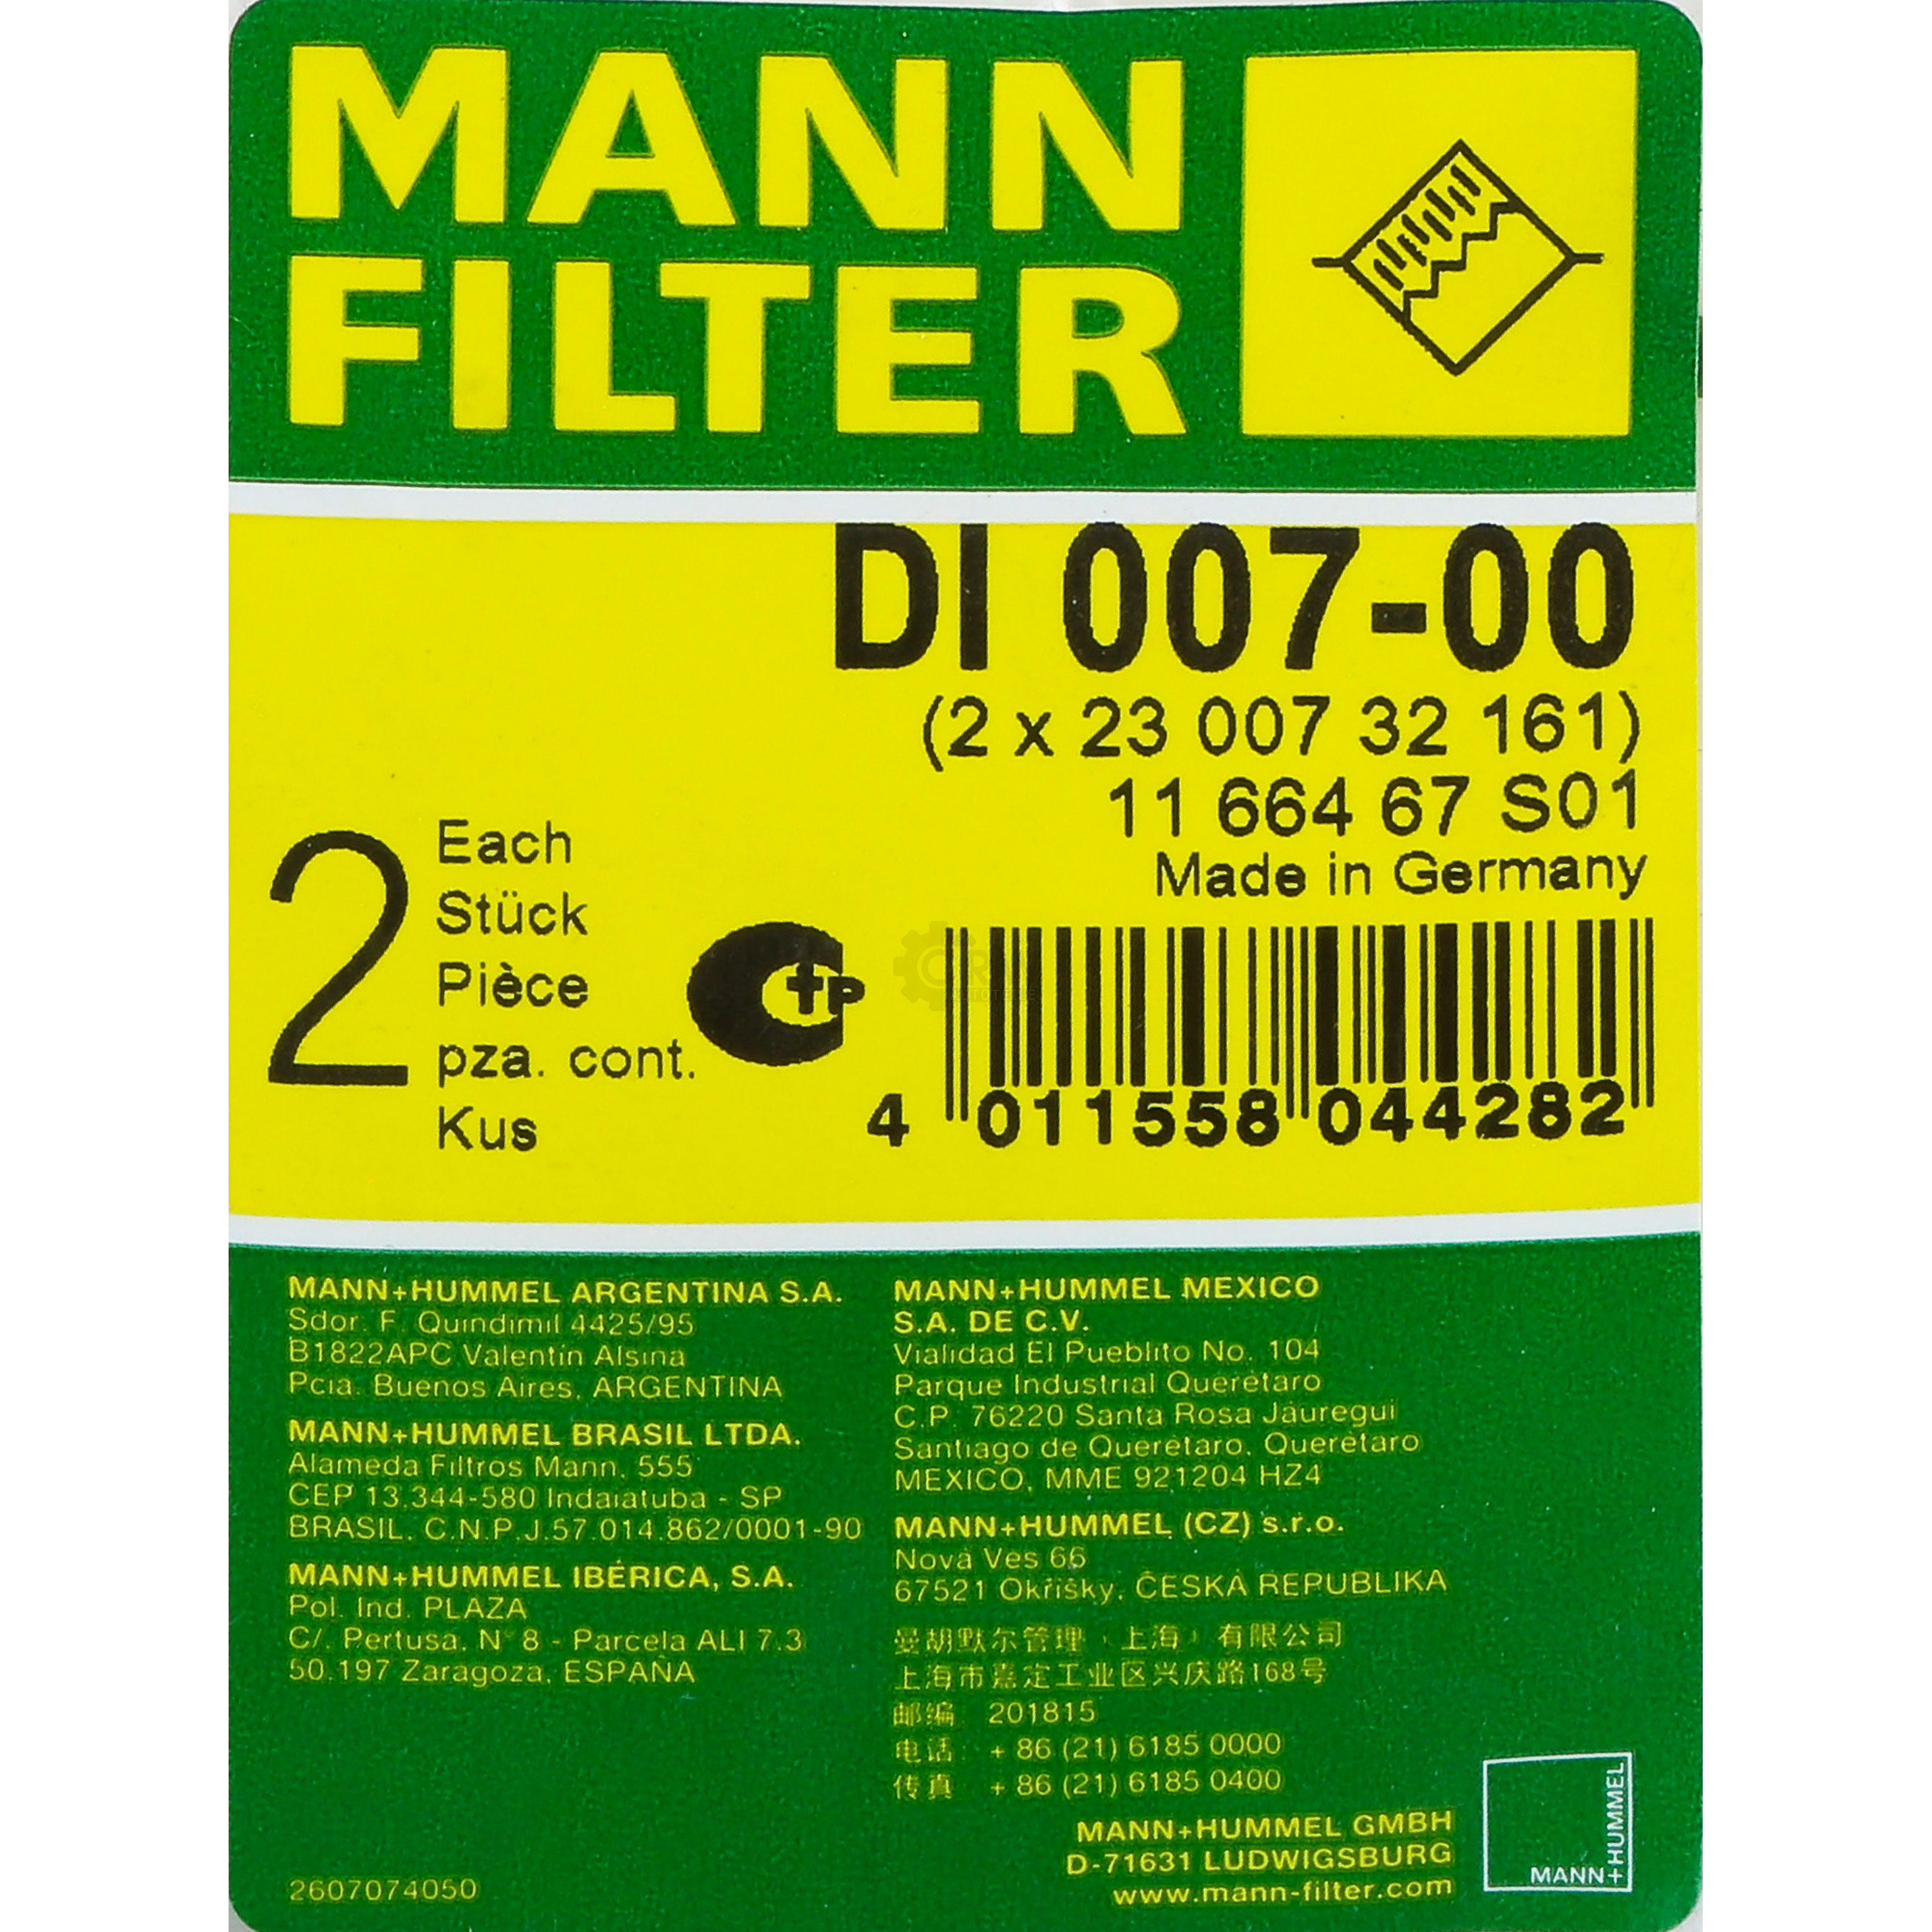 MANN-FILTER Dichtung Ölfilter Di 007-00 für BMW ALPINA WIESMAN